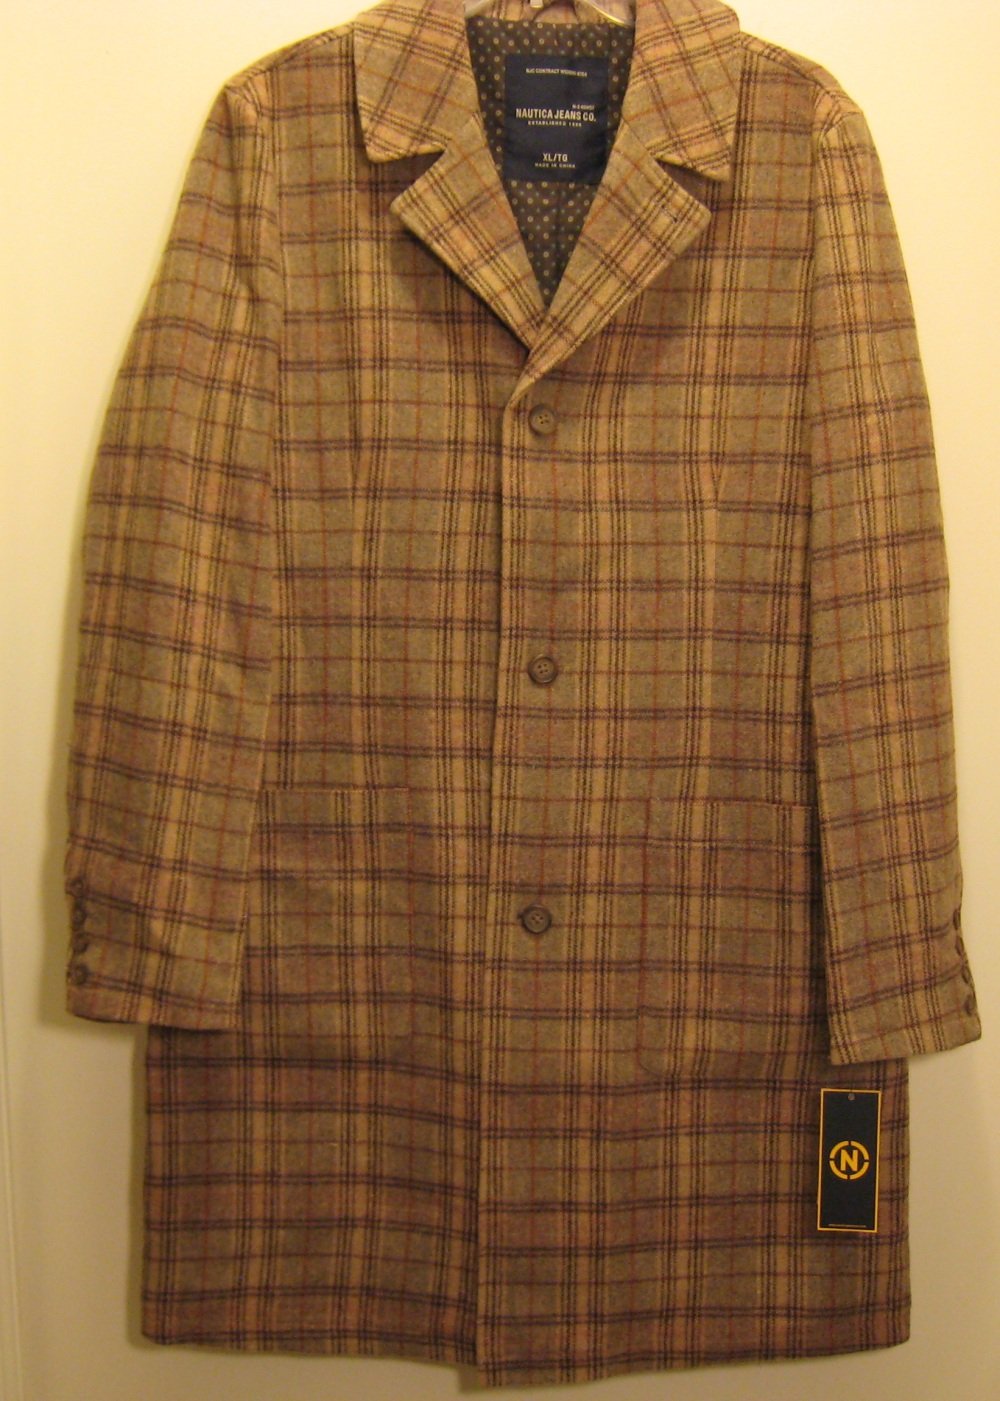 NEW NAUTICA Mens Jacket Coat M NWT $199 80% Wool Medium